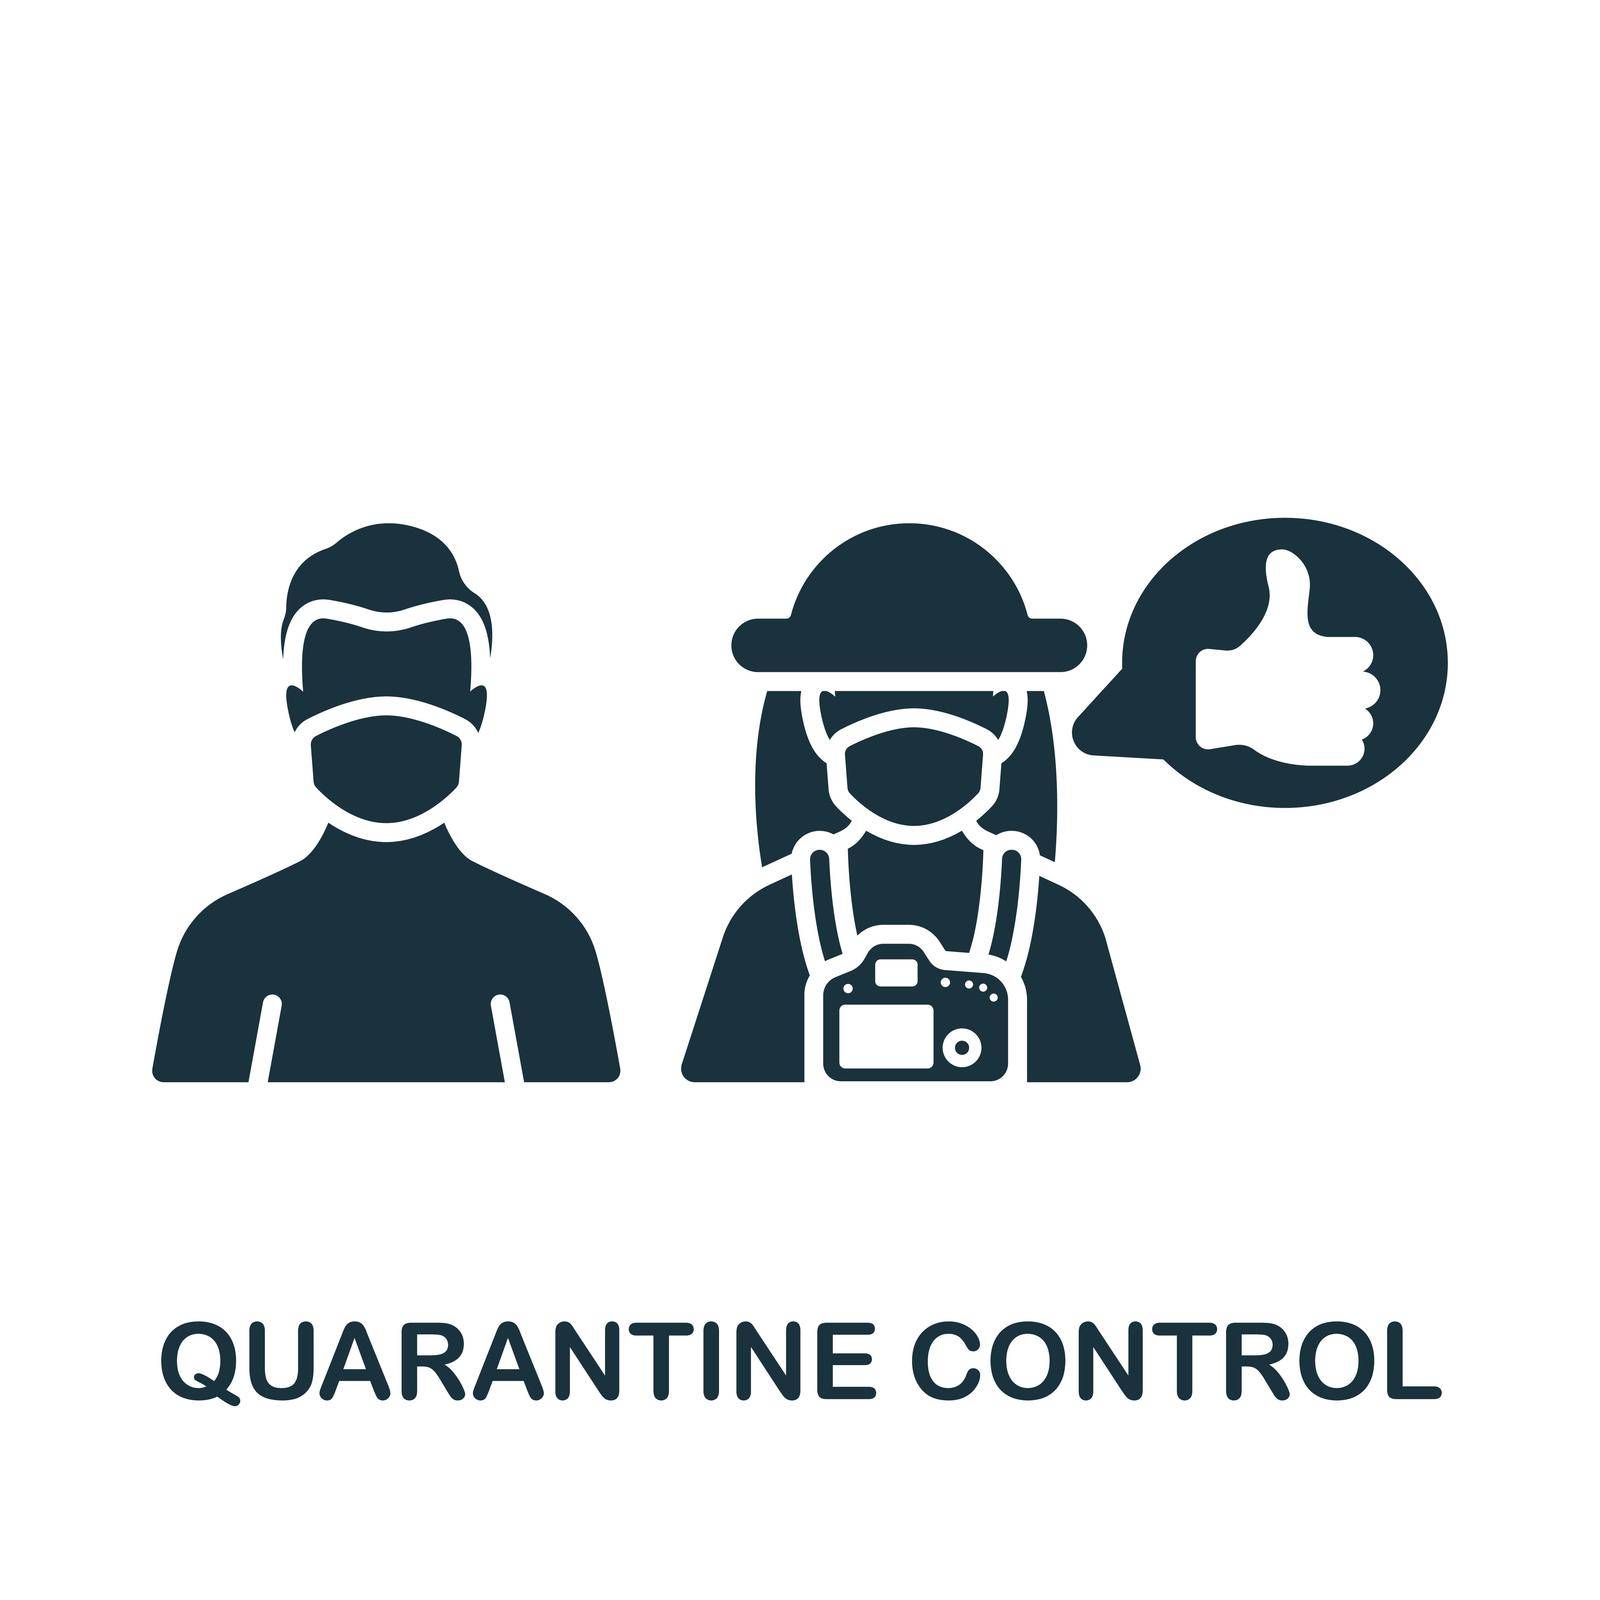 Quarantine Control icon. Simple line element quarantine symbol for templates, web design and infographics.